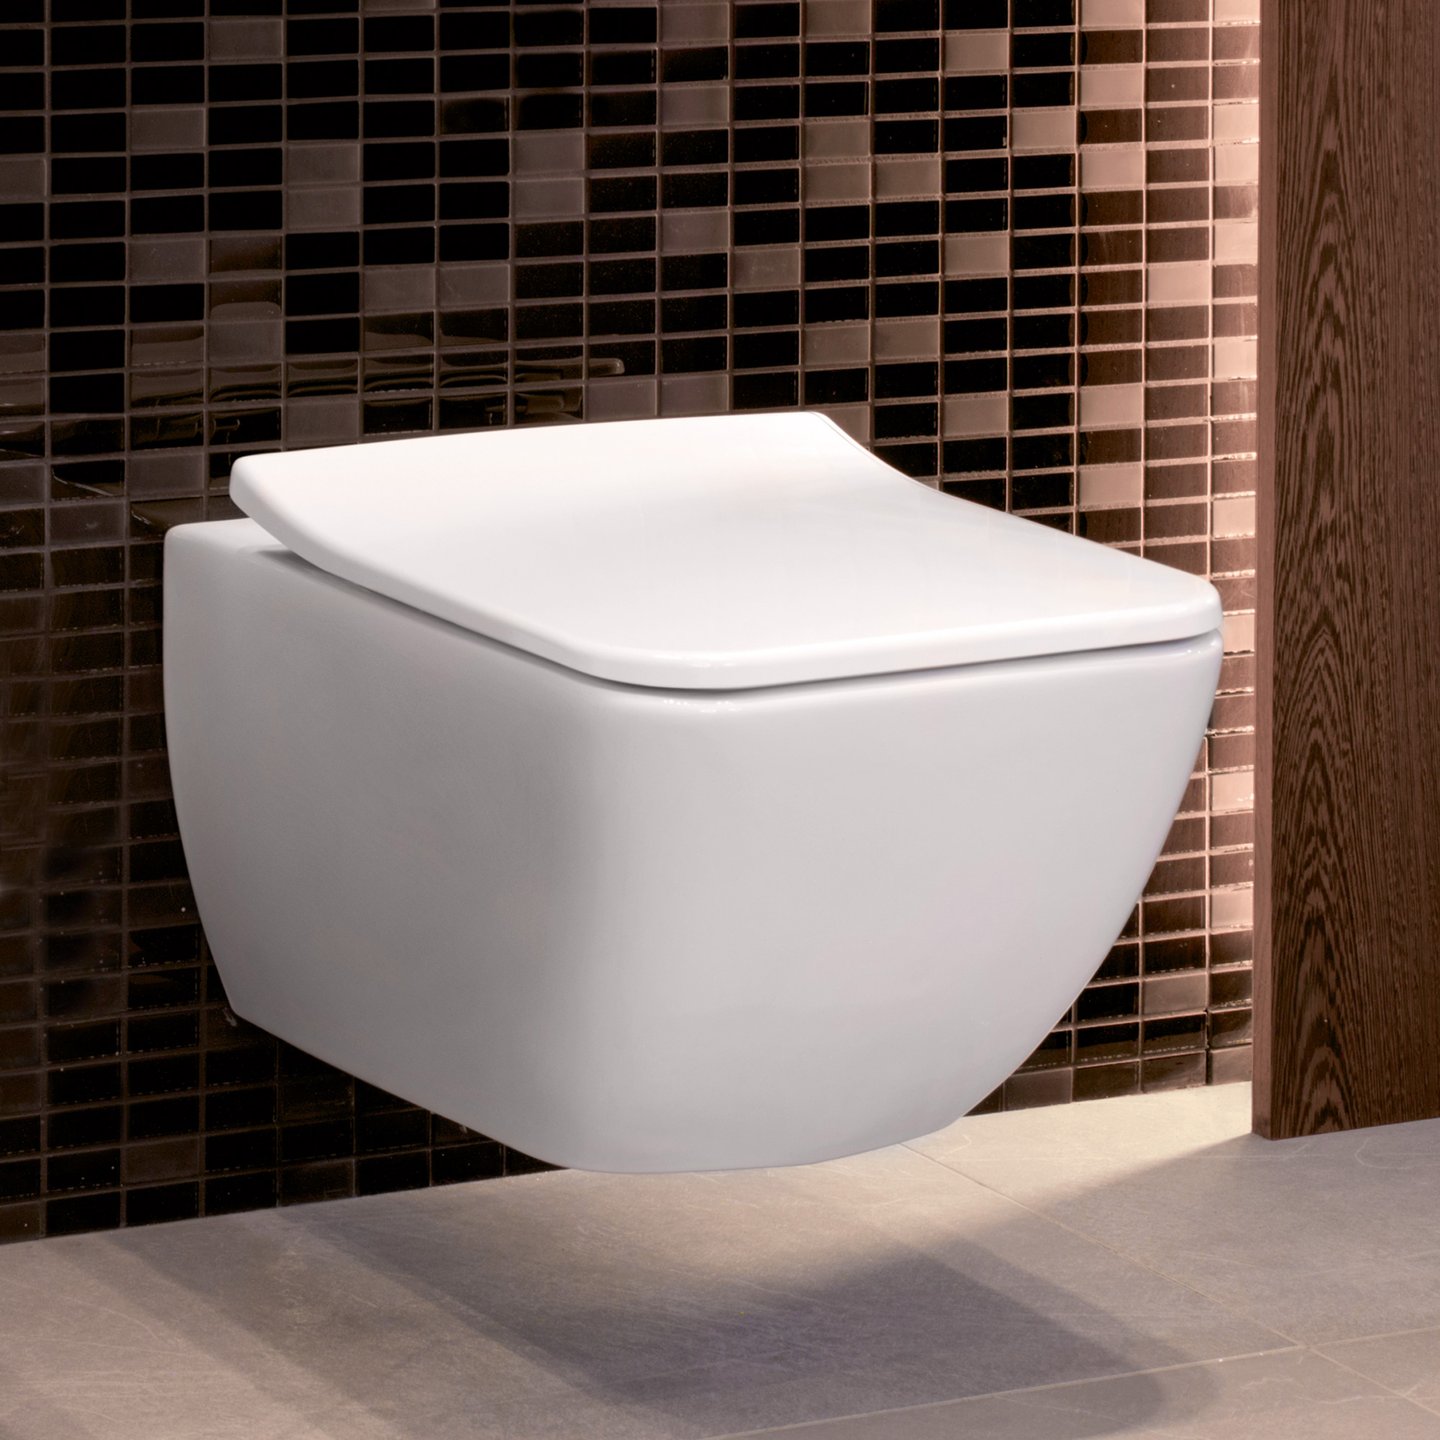 smog is genoeg strottenhoofd Villeroy & Boch Venticello wall-mounted washdown toilet, open flush rim  white, with CeramicPlus - 4611R0R1 | REUTER